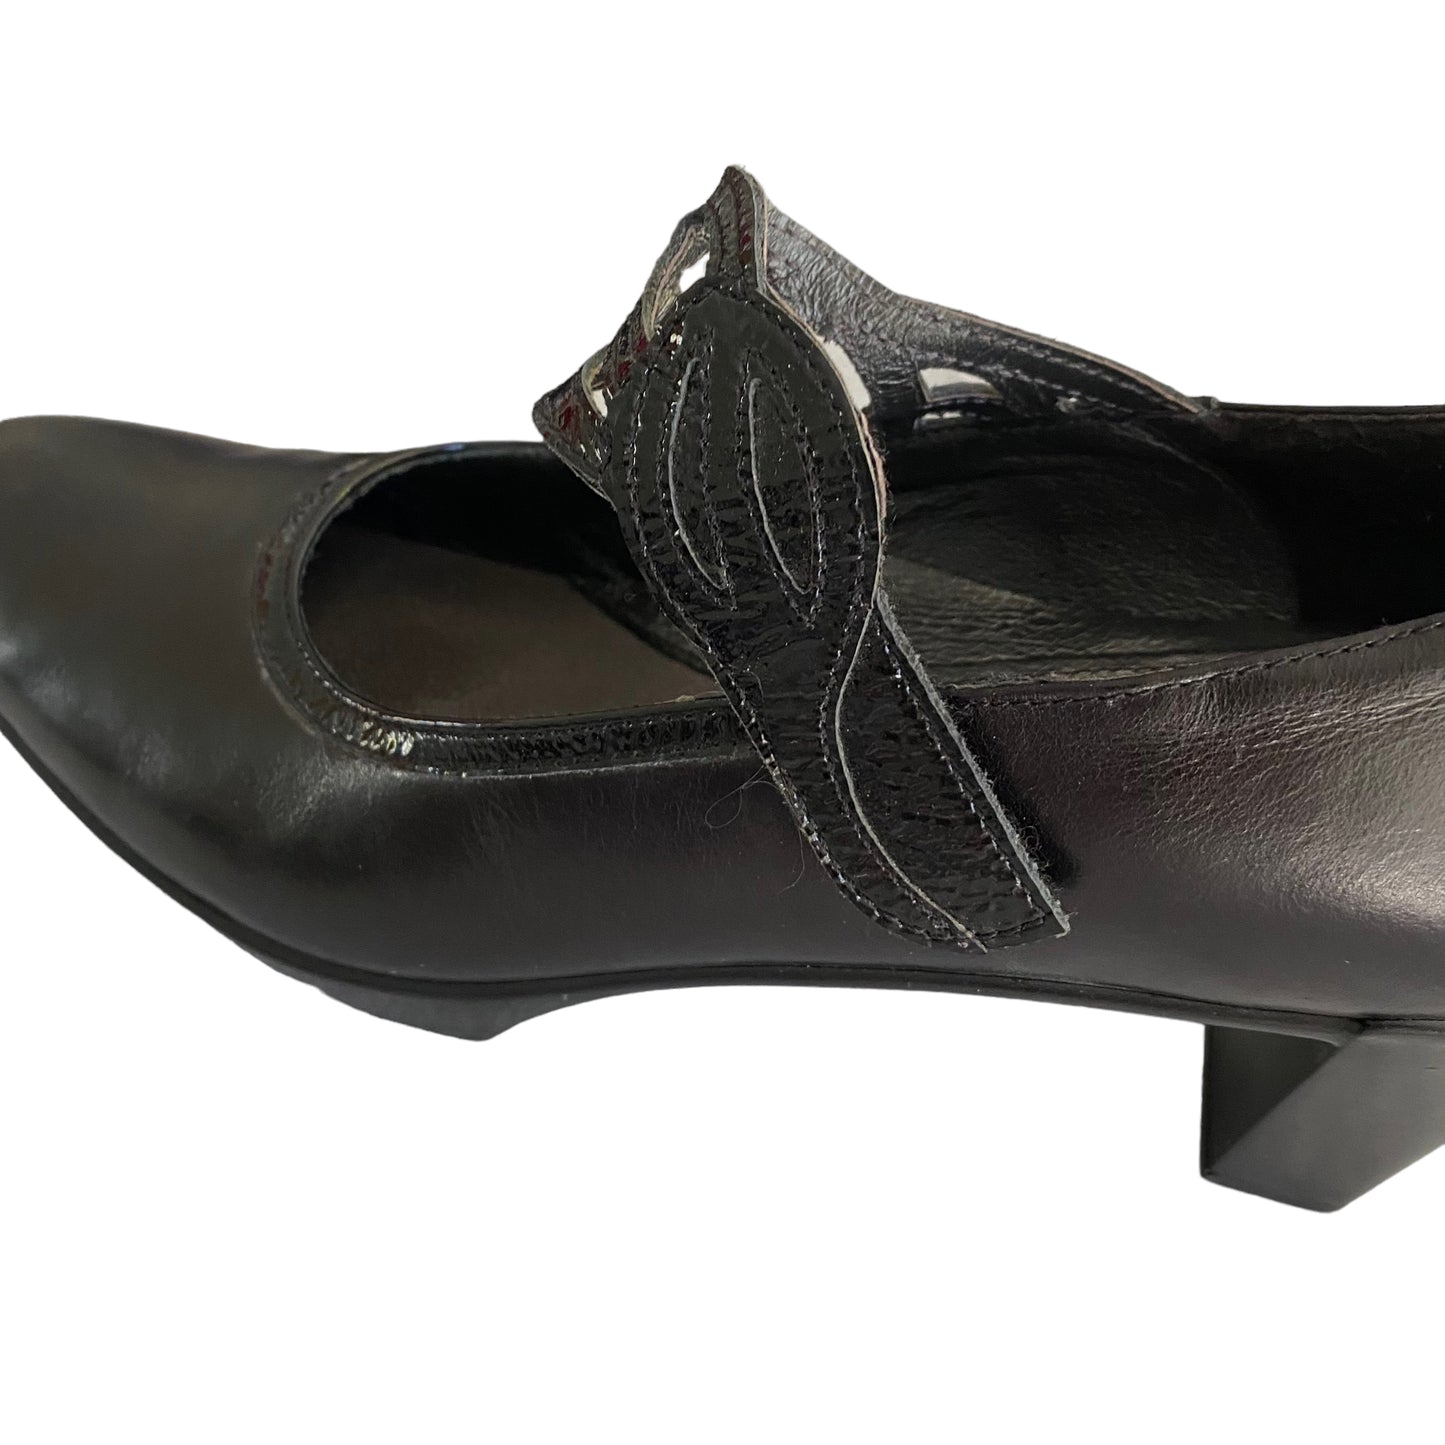 Naot Black Leather Mary Jane Shoes Size 9.5